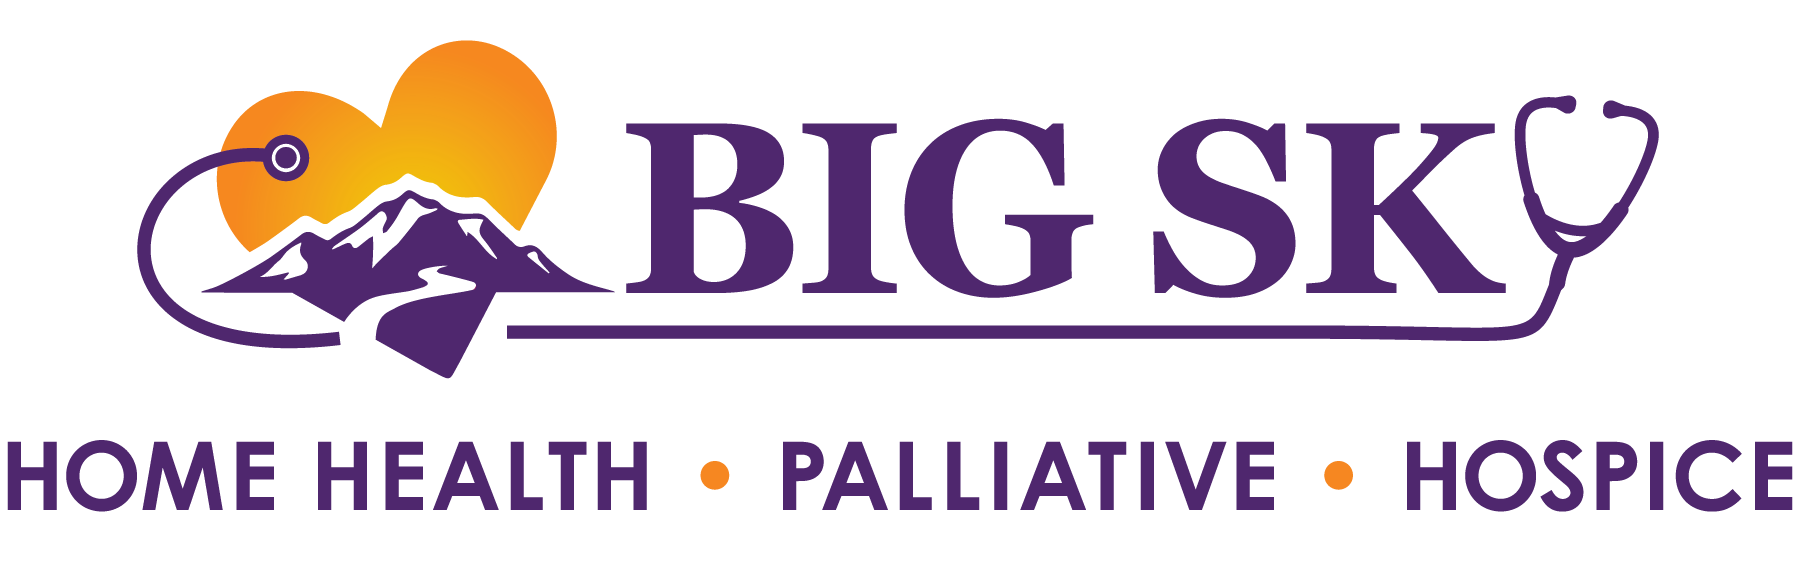 Big Sky Home Health, Palliative & Hospice